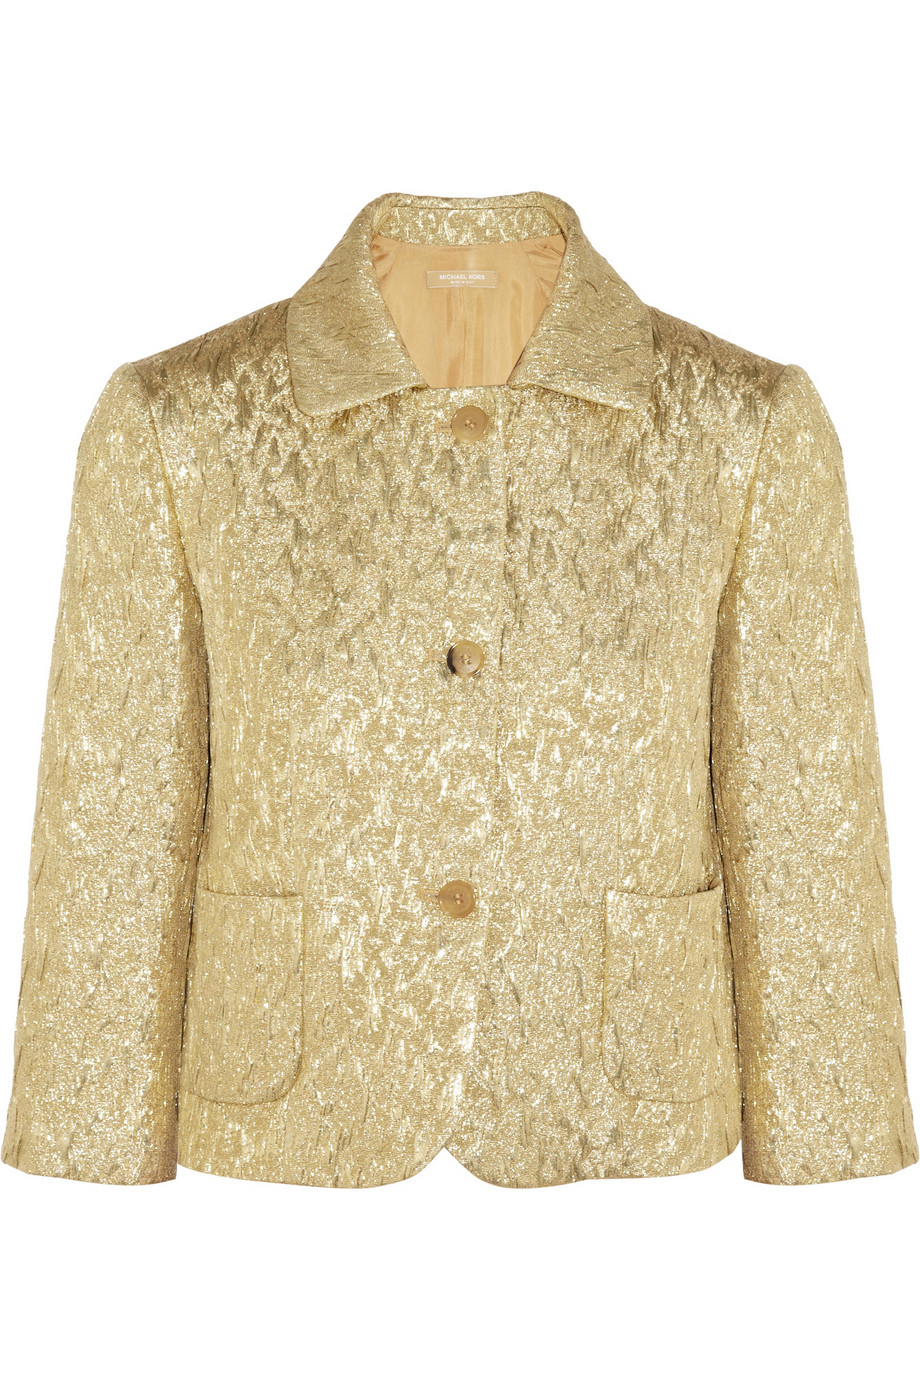 Michael Kors Brocade Jacket in Gold | Lyst